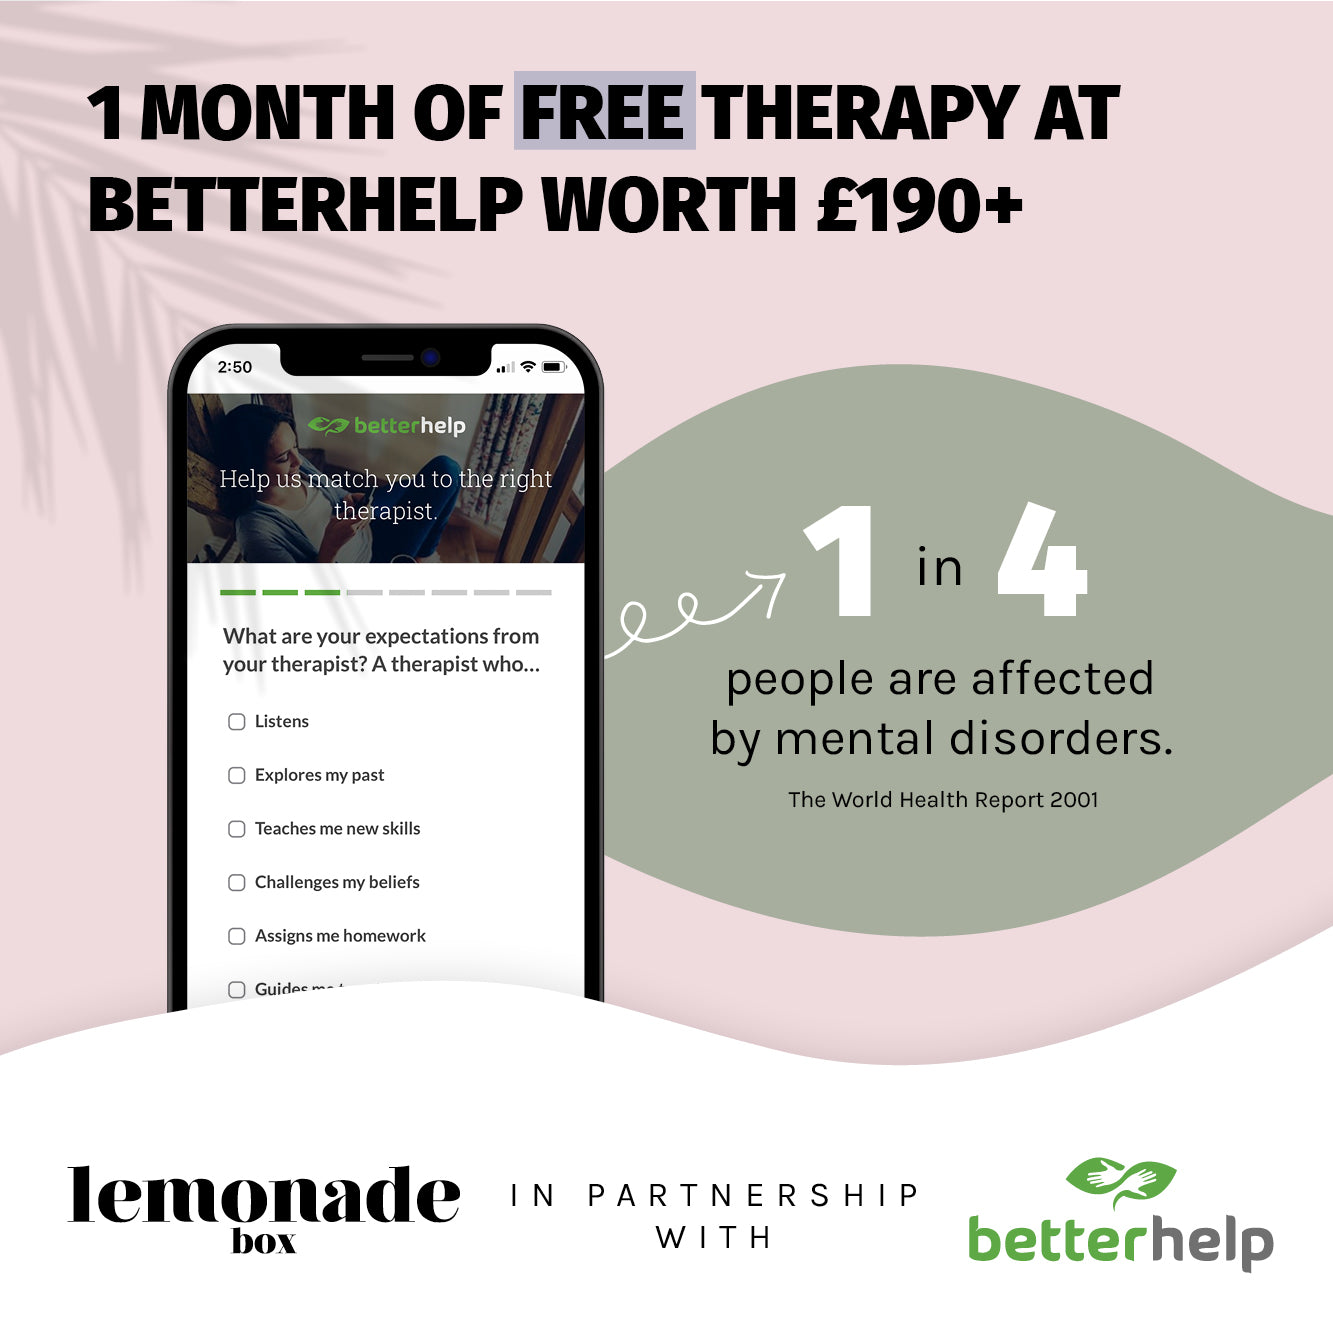 Lemonade Box in partnership with BetterHelp